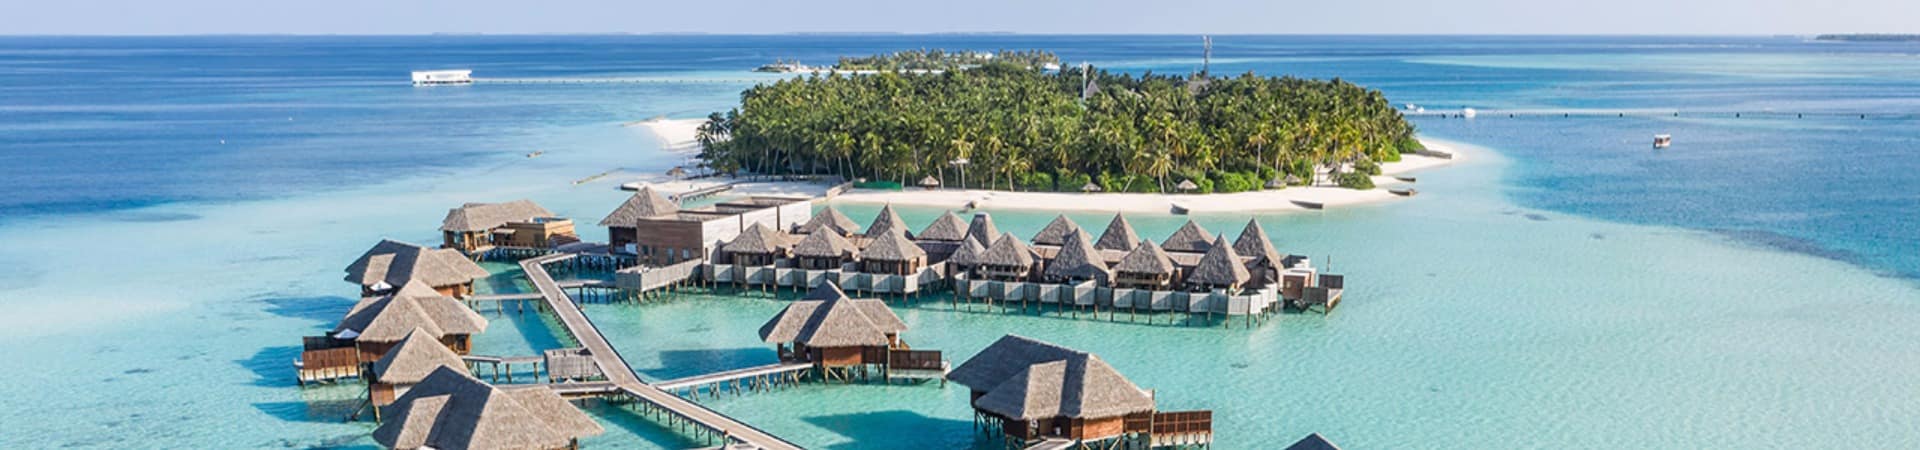 Conrad maldives rangali island vista aerea